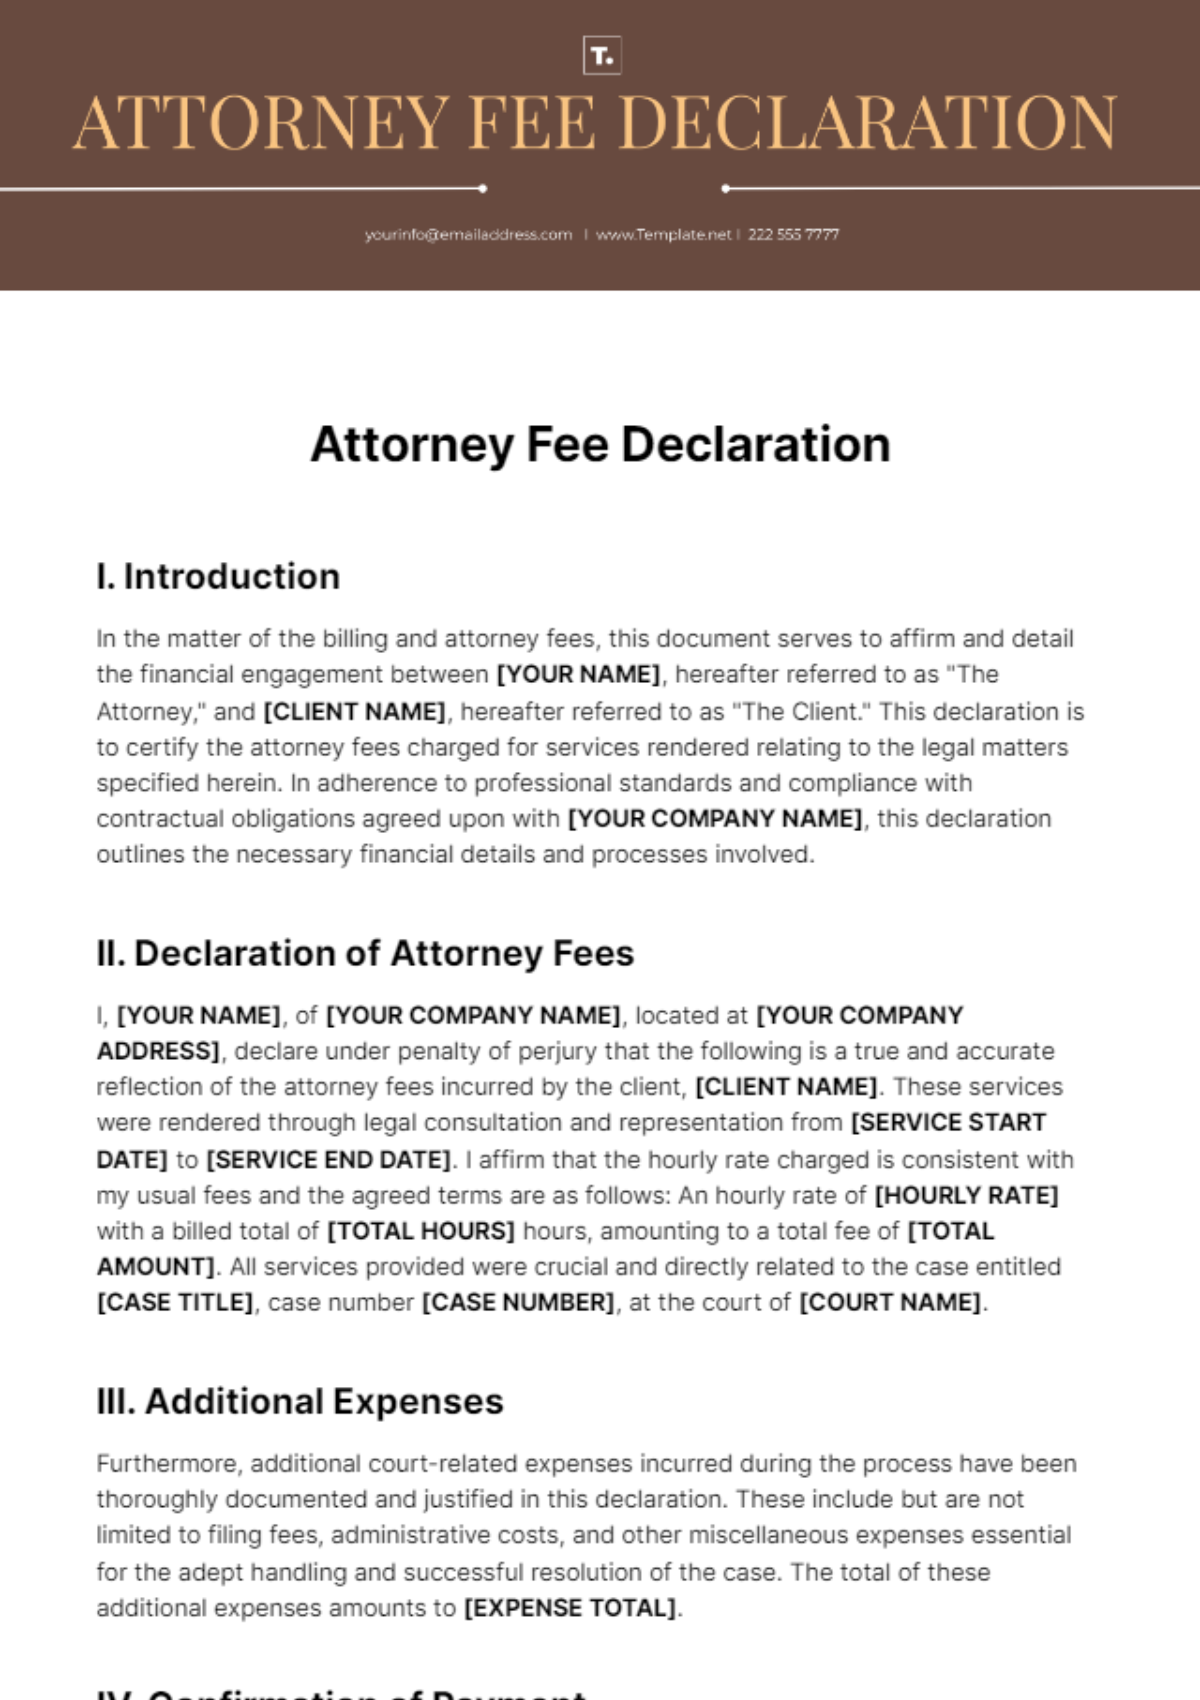 Free Attorney Fee Declaration Template